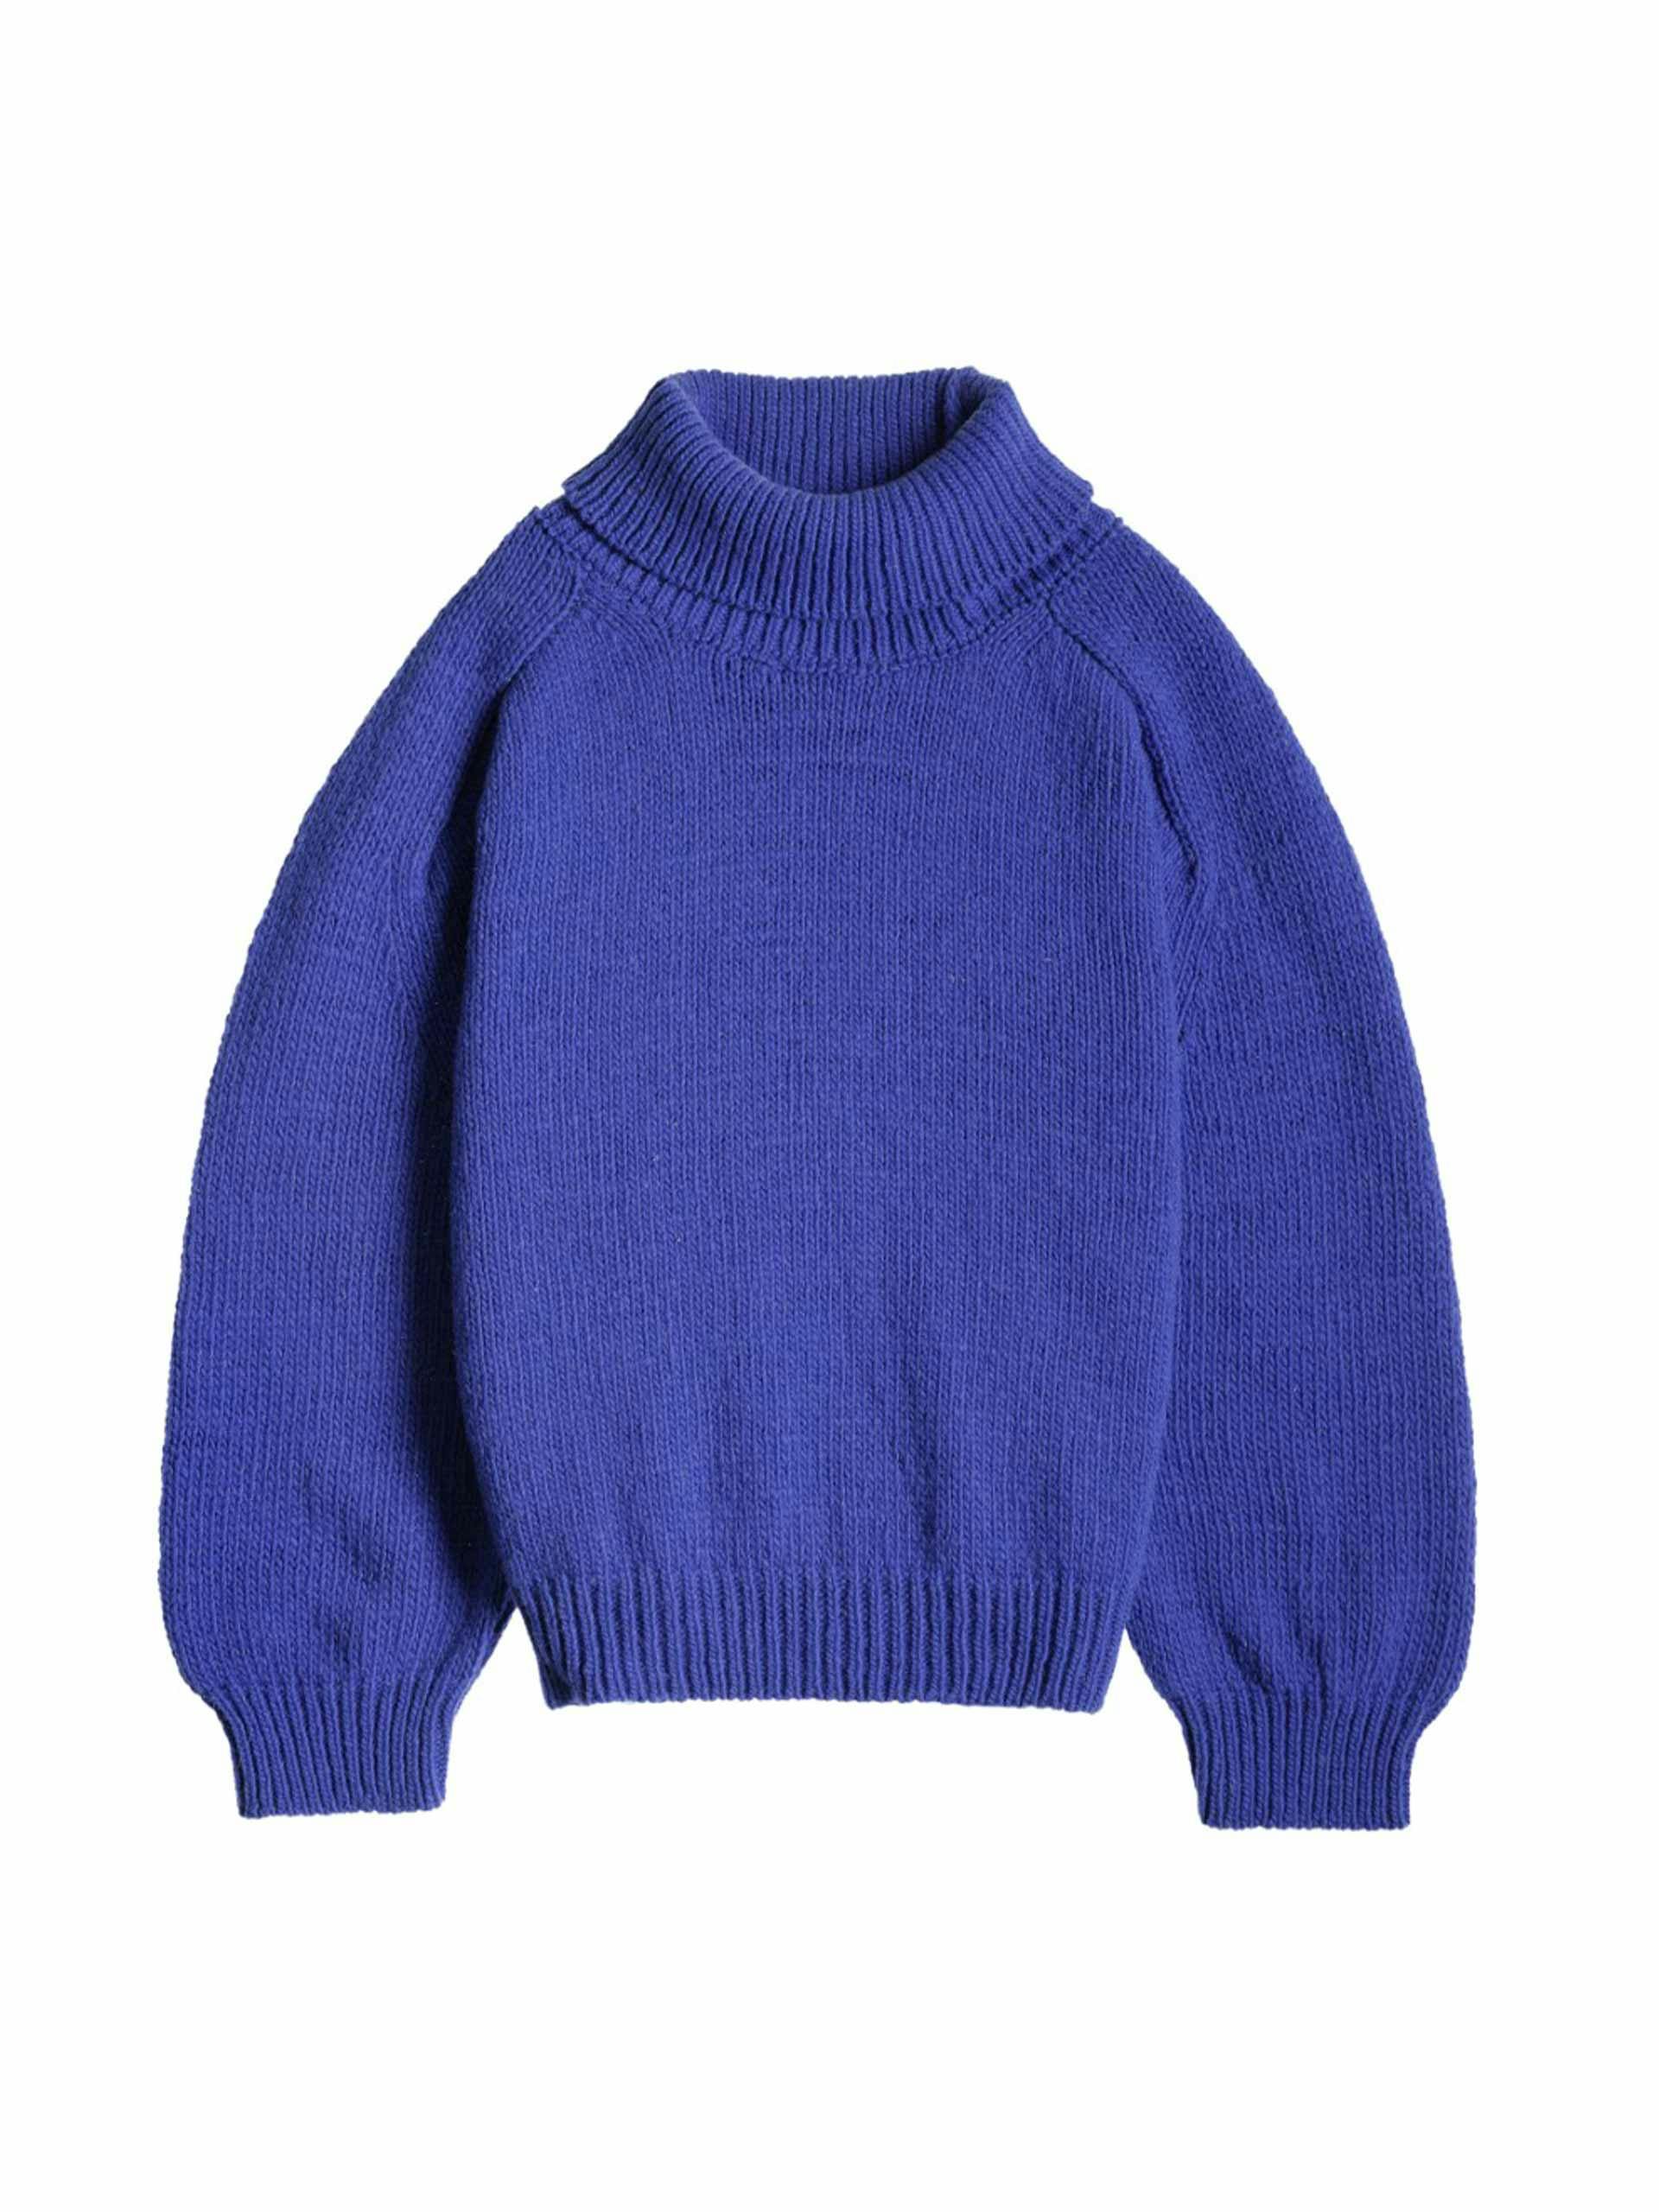 Blue wool turtleneck jumper